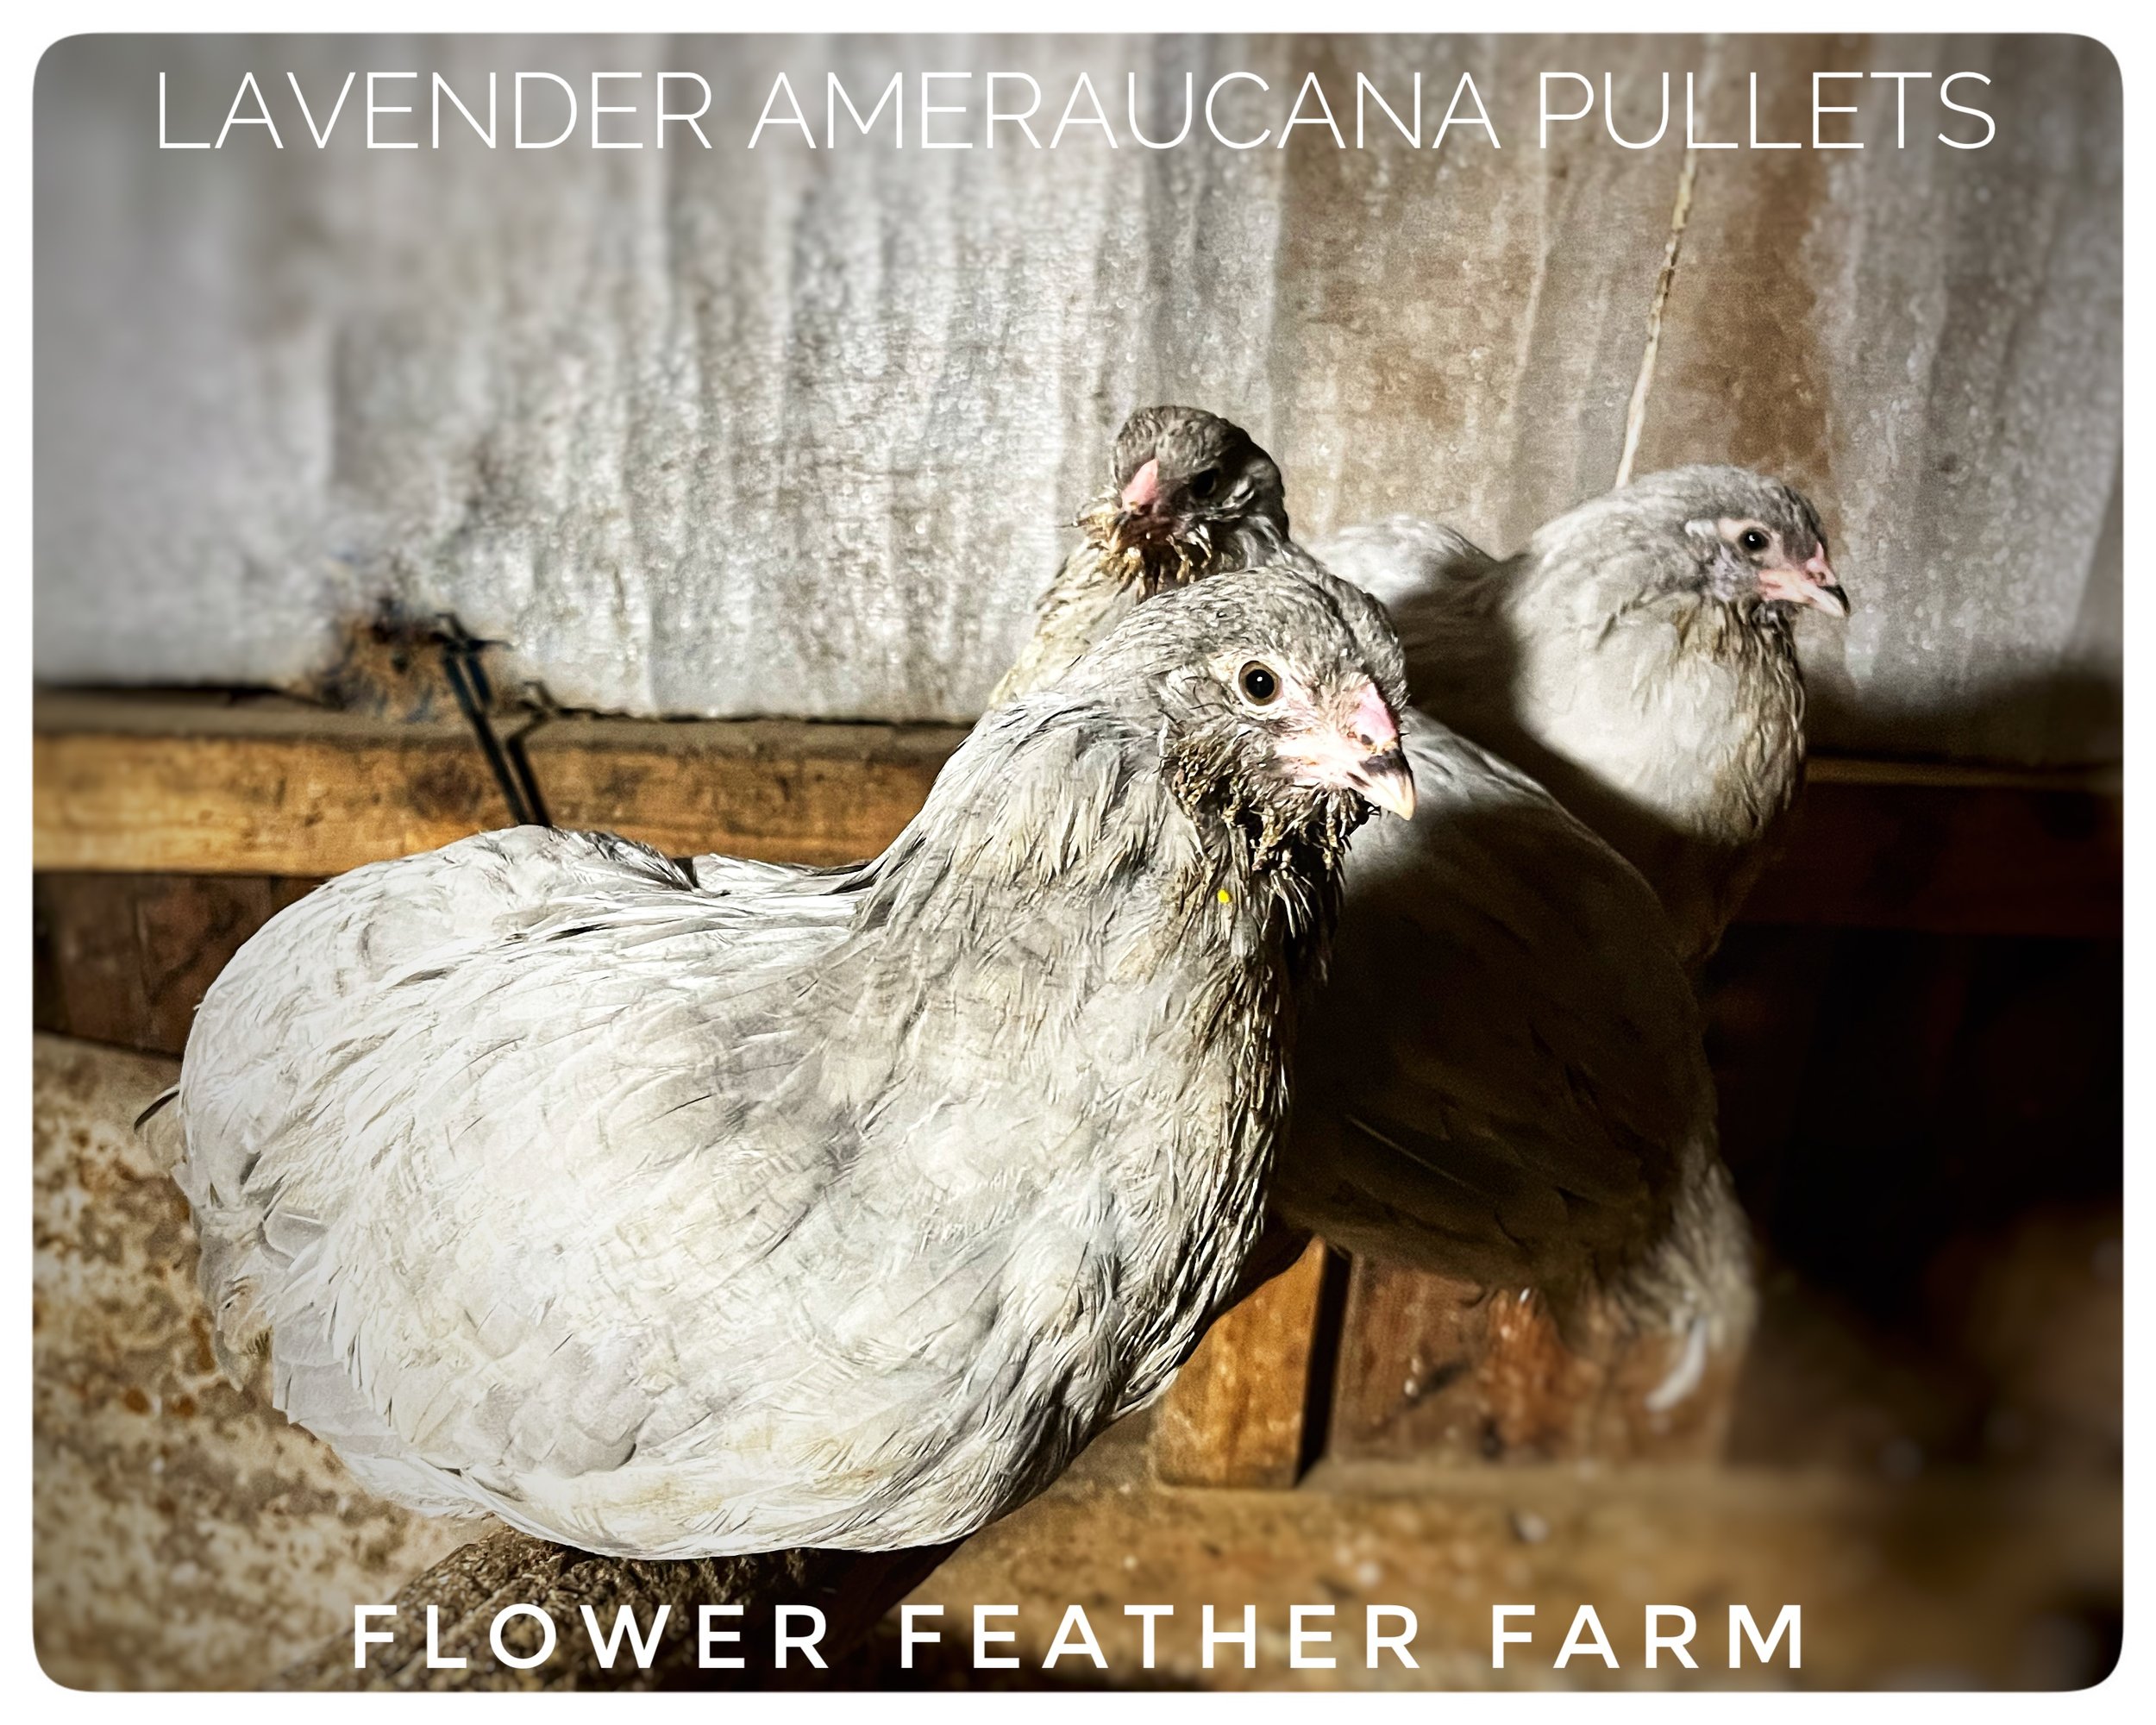 Lavender Ameraucana Pullets